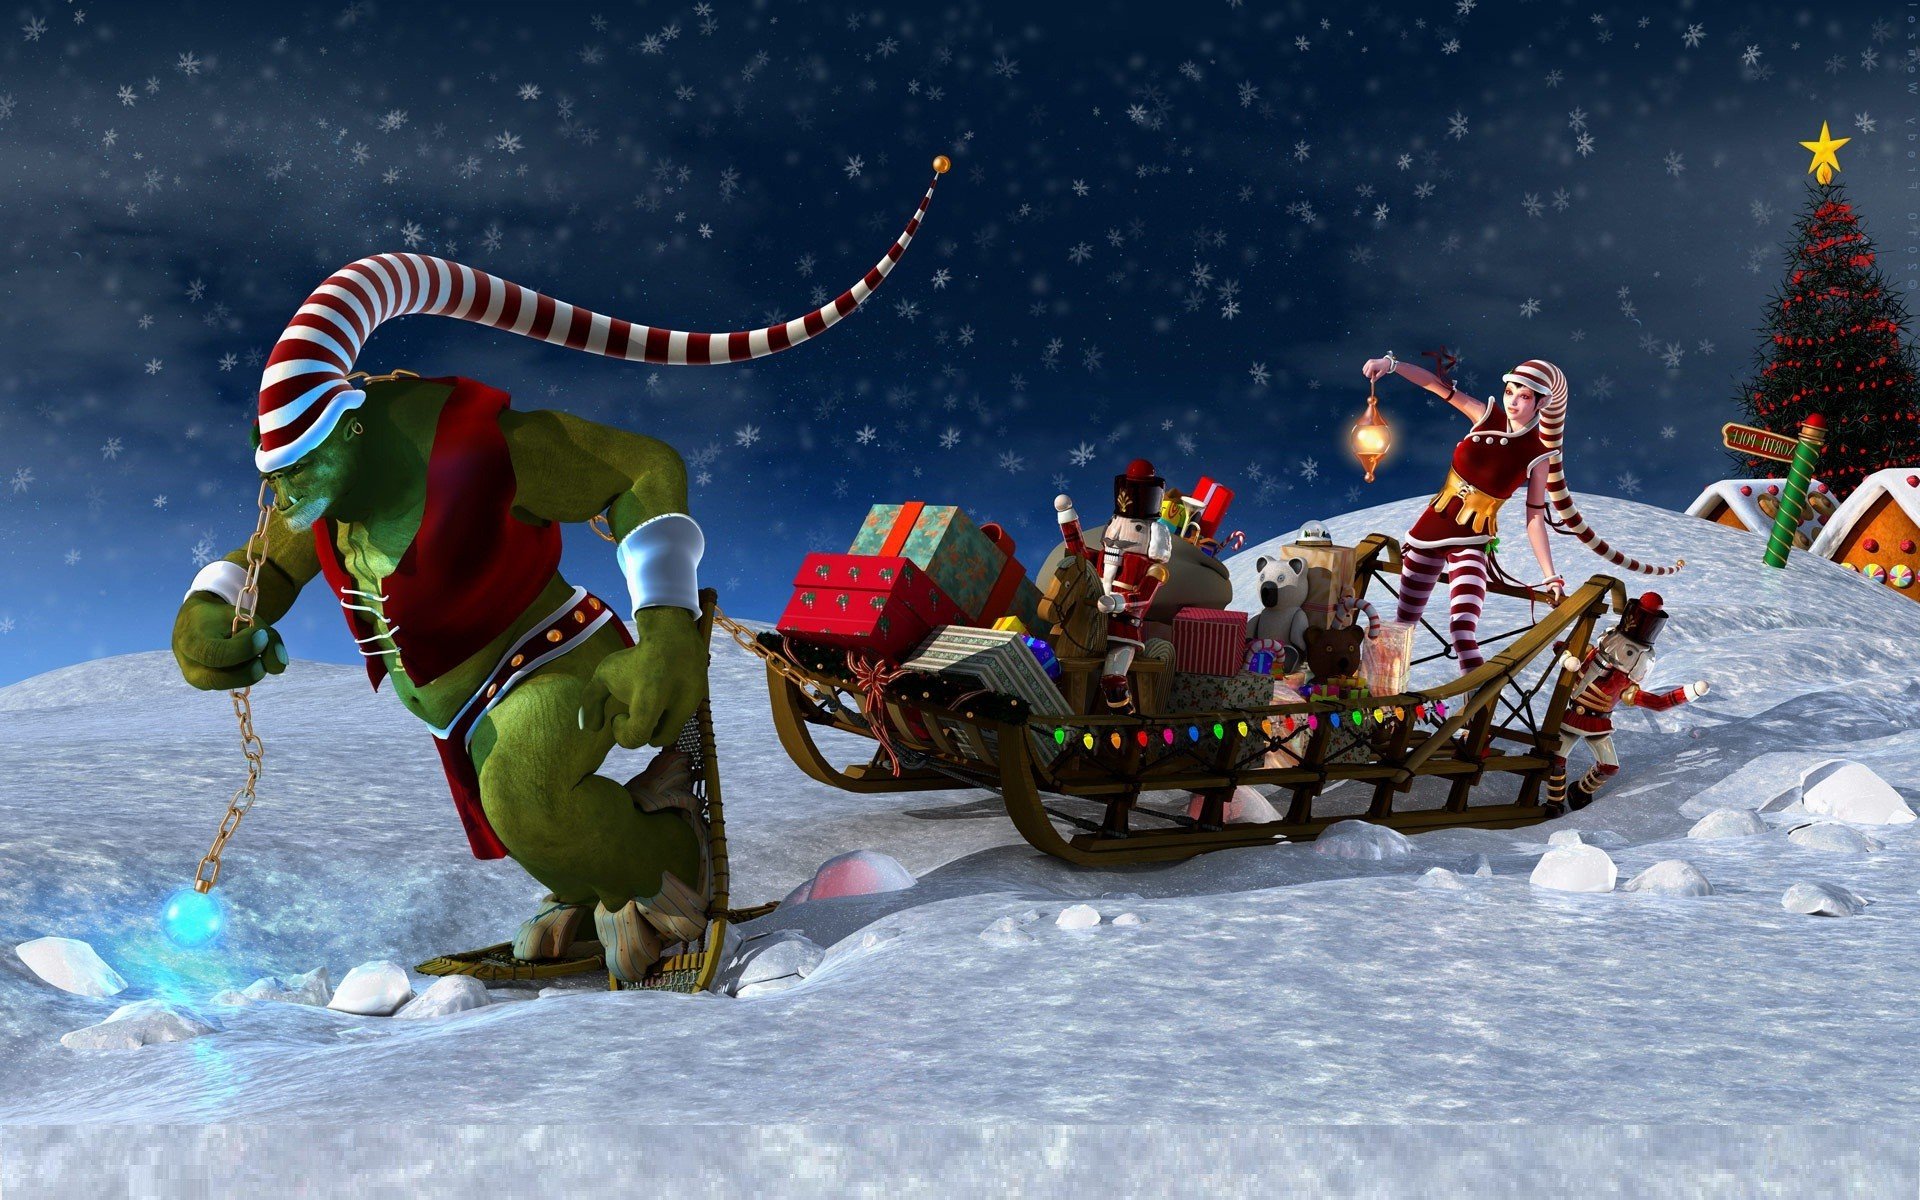 Animated Christmas Backgrounds For Desktop 17359 Wallpaper 1920x1200